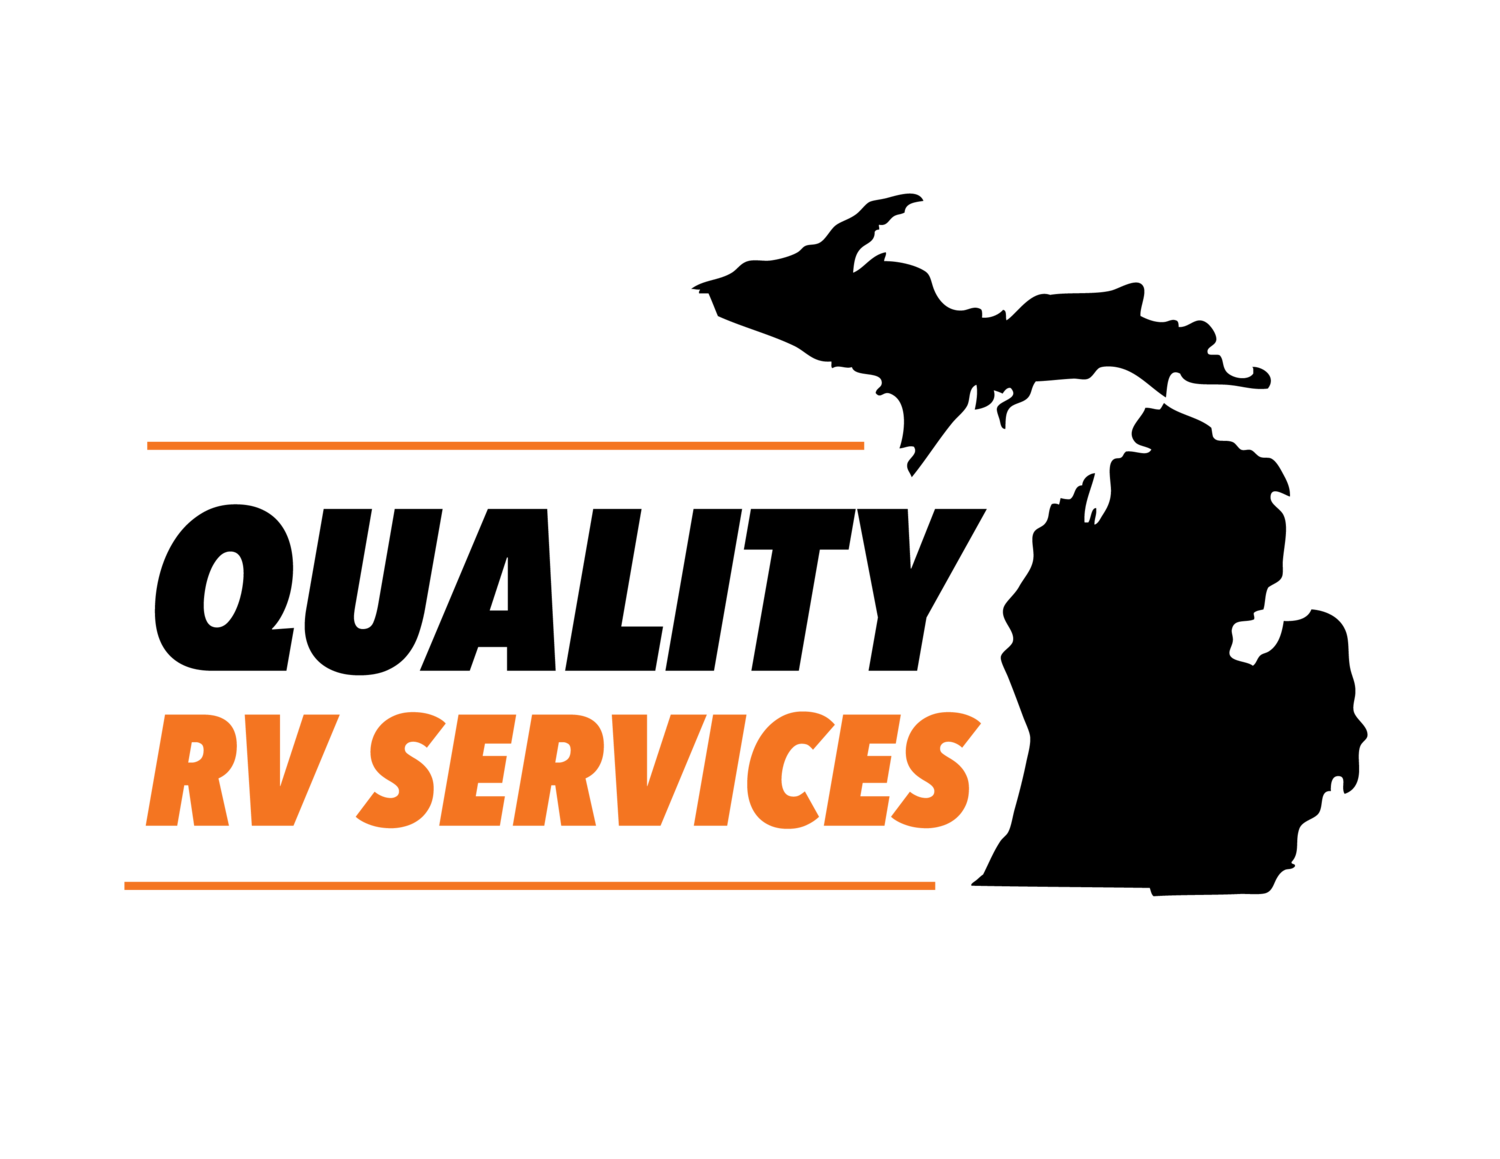 Quality RV Services